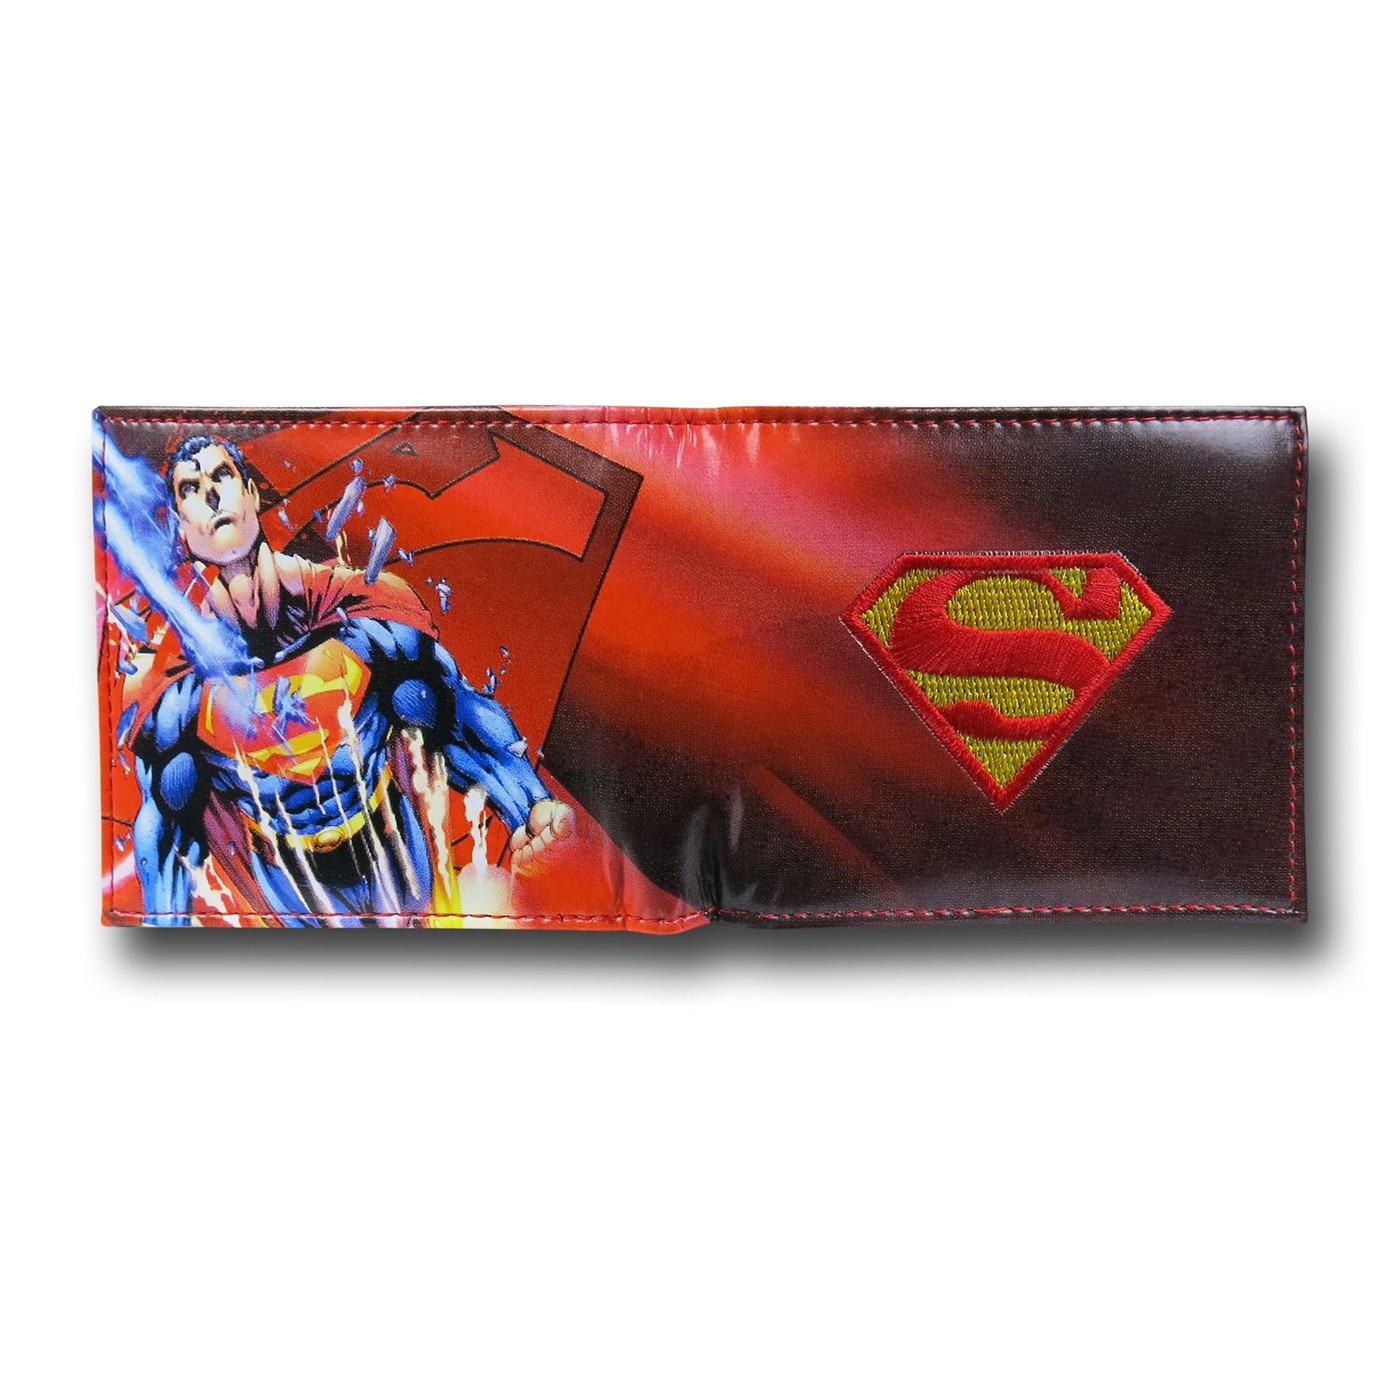 Superman 3D Emblem Sublimated Wallet